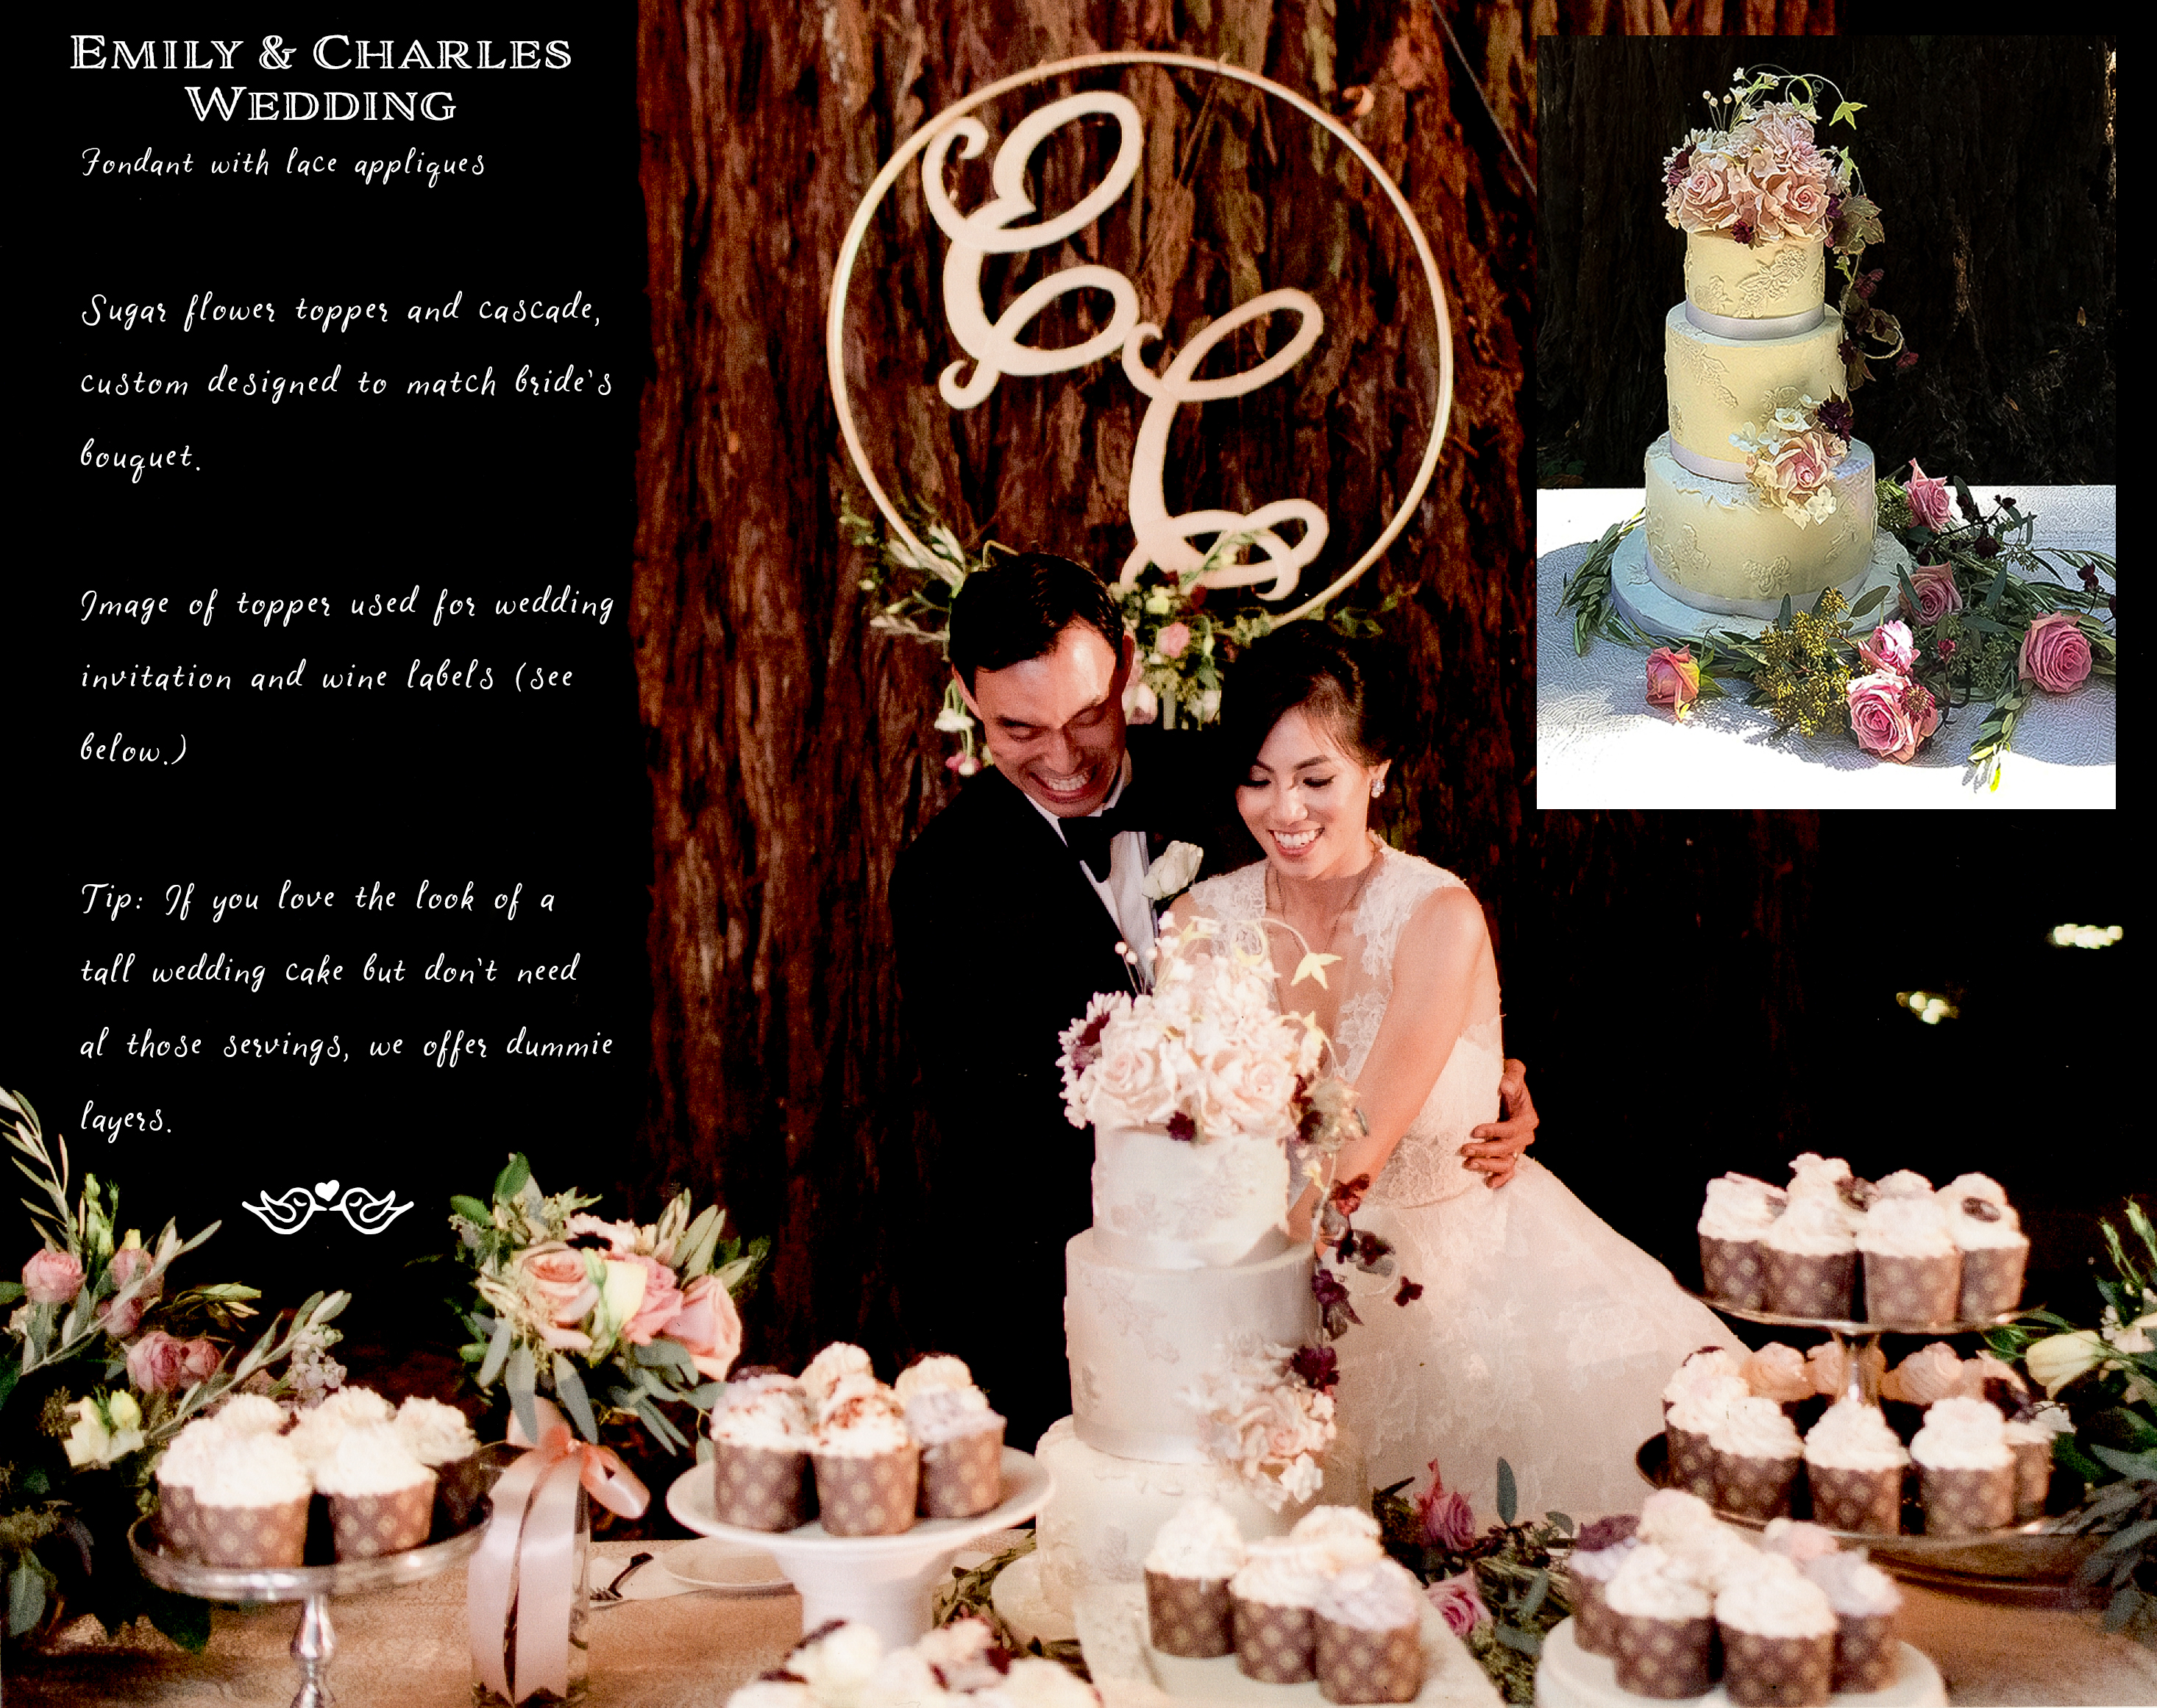 wedding cake by Sonoma Celebrates, lace appliques